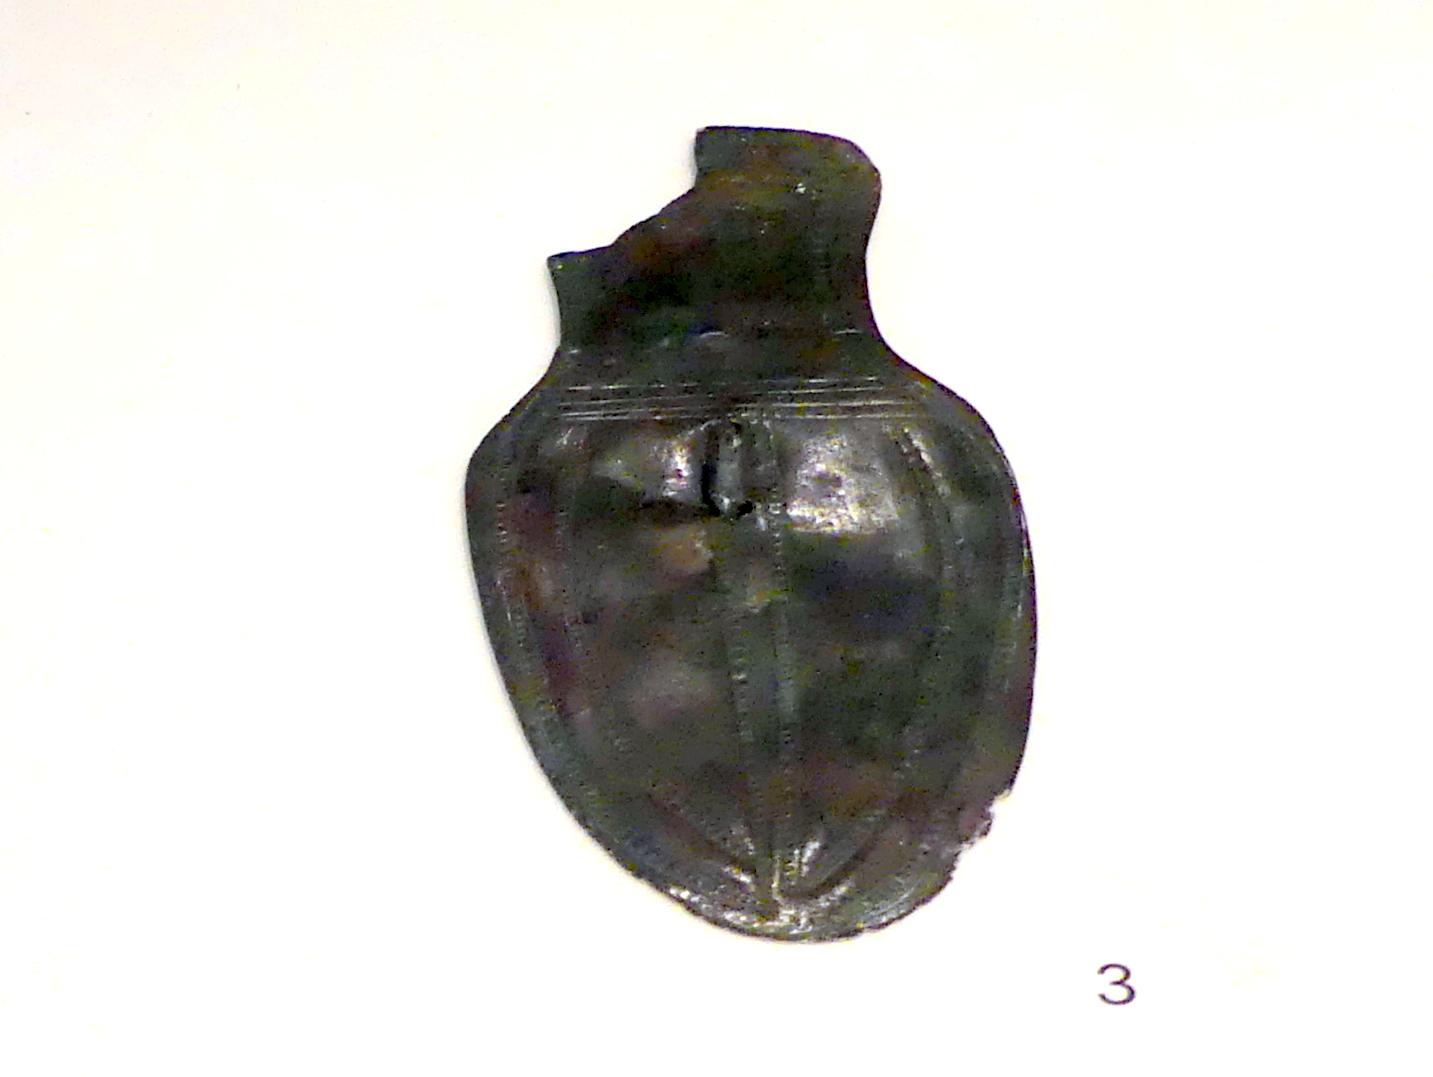 Schmuckschild, Frühe Bronzezeit, 3365 - 1200 v. Chr., 2200 - 1500 v. Chr., Bild 1/2